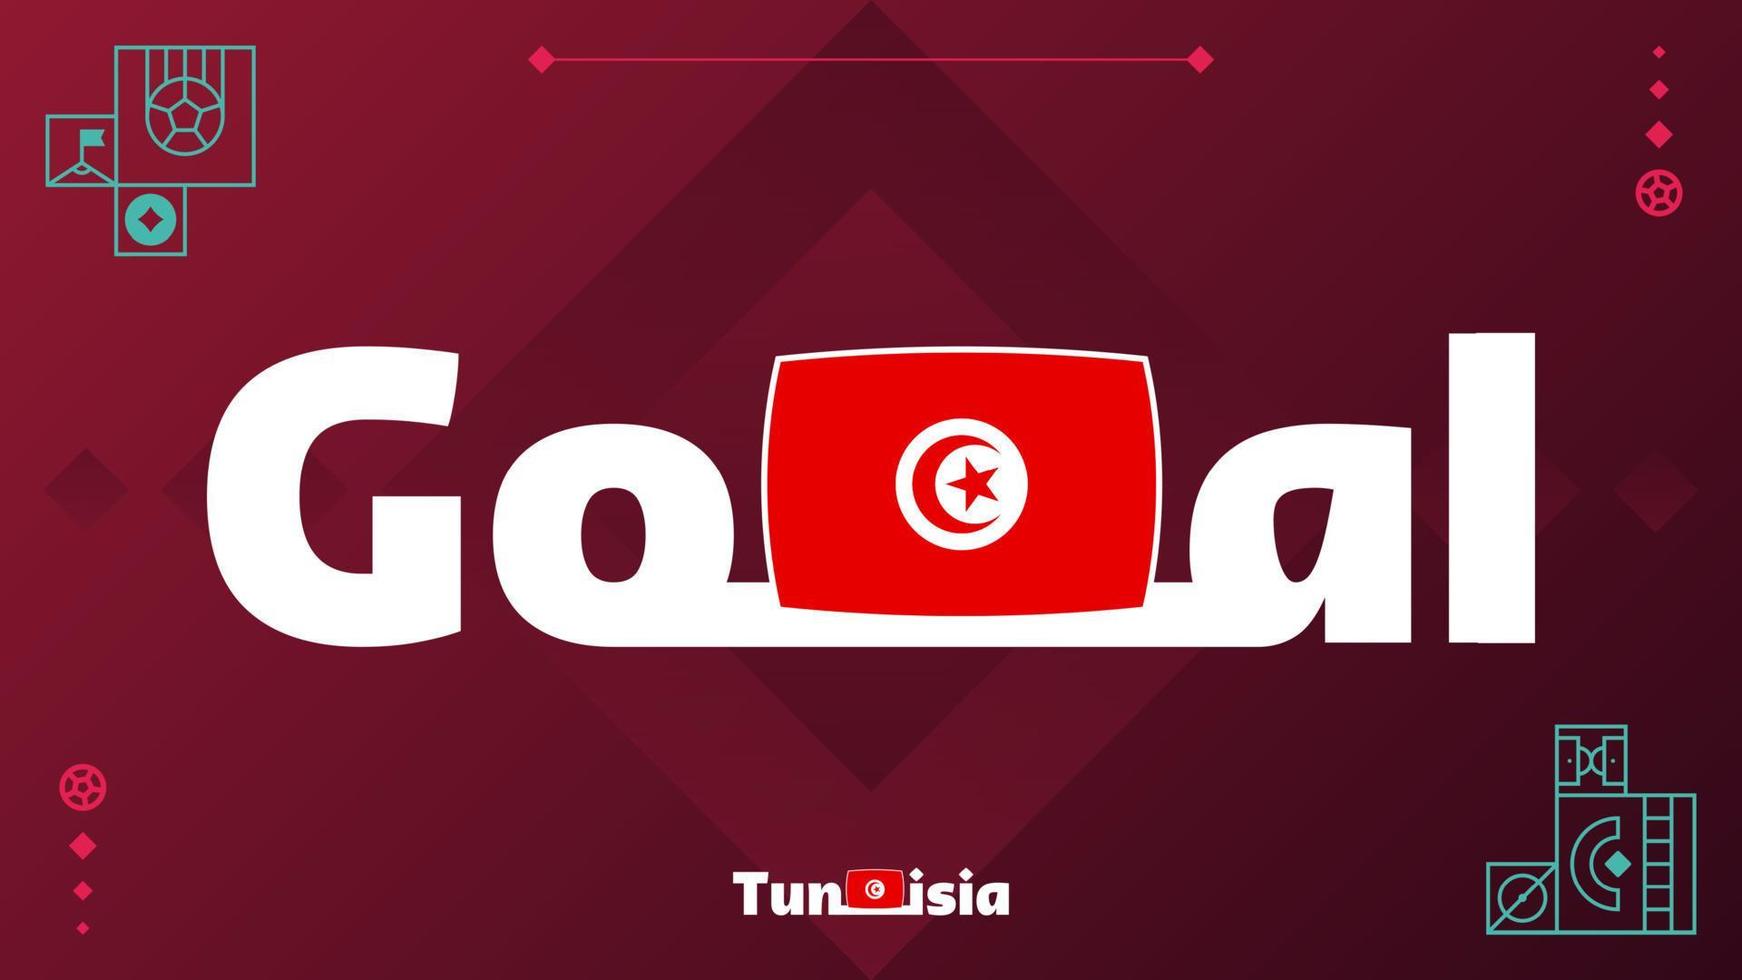 tunisia flag with goal slogan on tournament background. World football 2022 Vector illustration